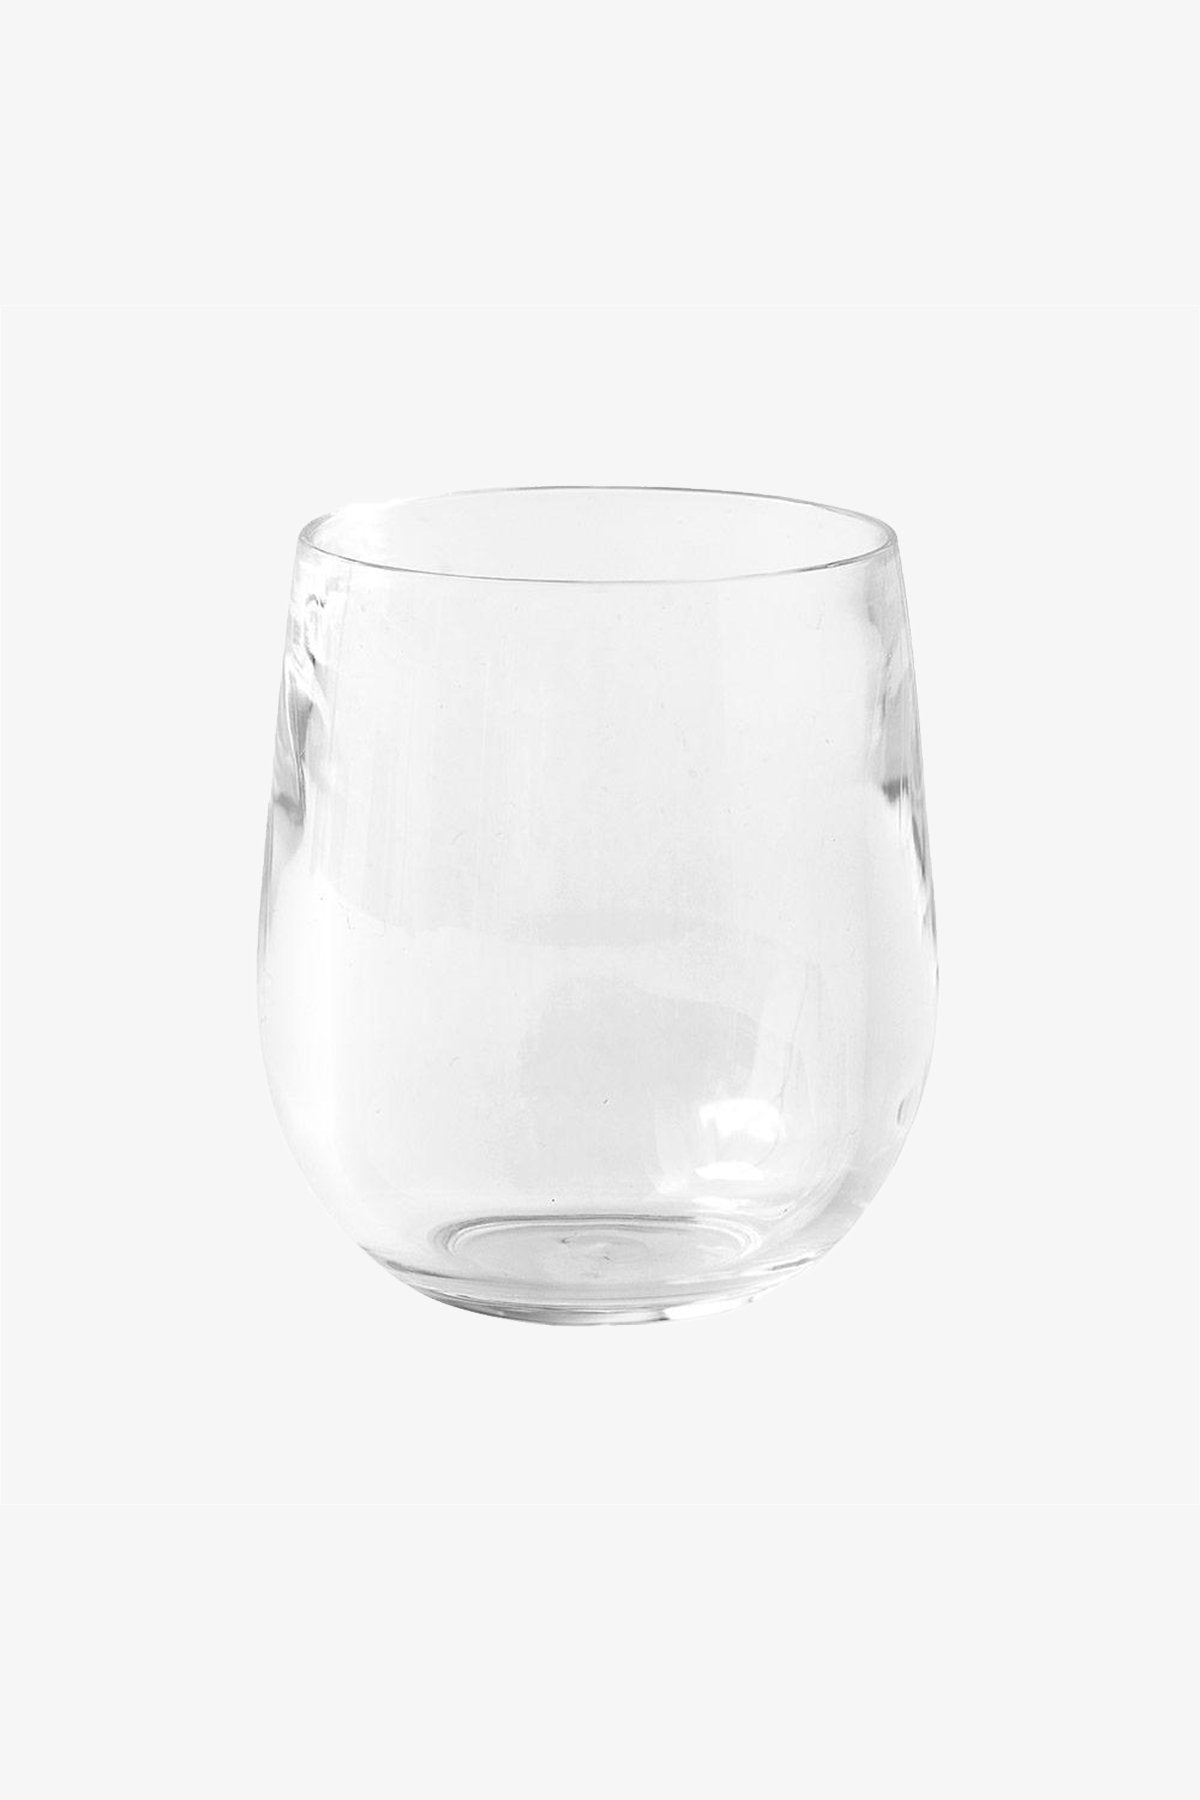 Acrylic 12oz Tumbler Glass in Crystal Clear - shop-olivia.com